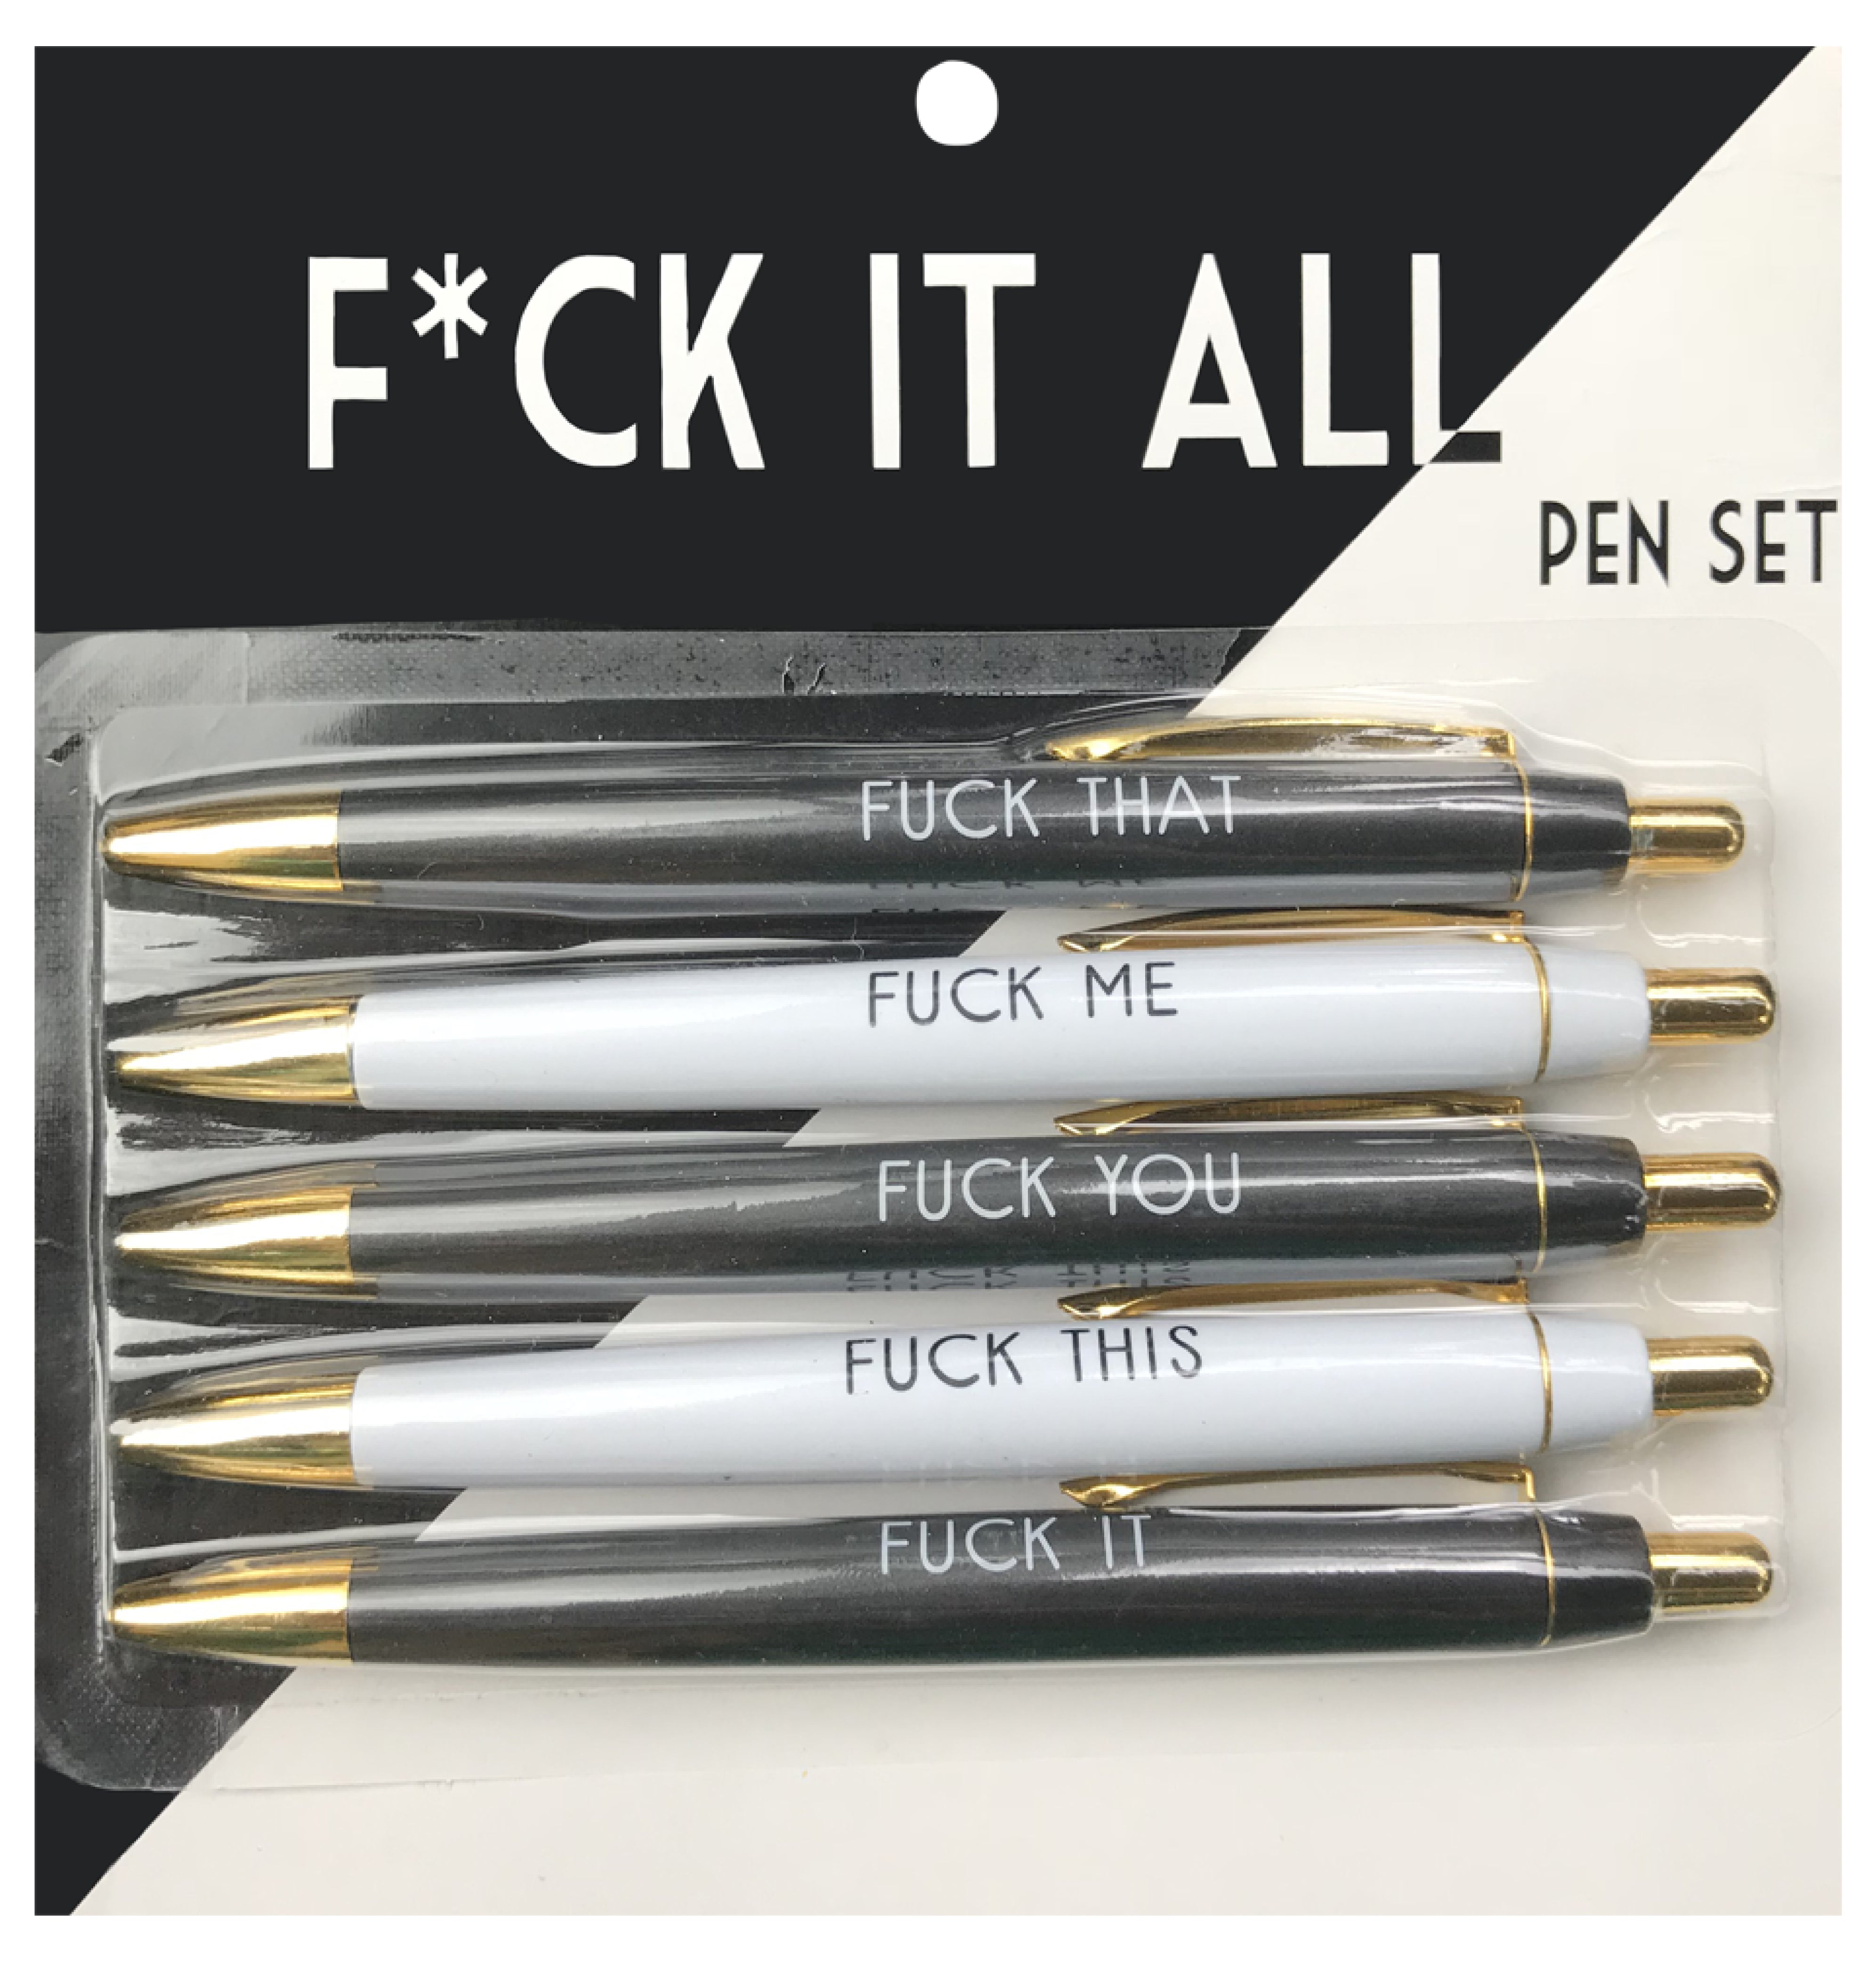  5-Piece set Fuck Pens, Fuck It Pens, Fancy Fuck You Pens,  Swear Words Ballponit Pens, Novelty Pens for Adults, Black Ink 1.0 mm  Ballponit Pens, Retractable Fuck Pens, Unique Office